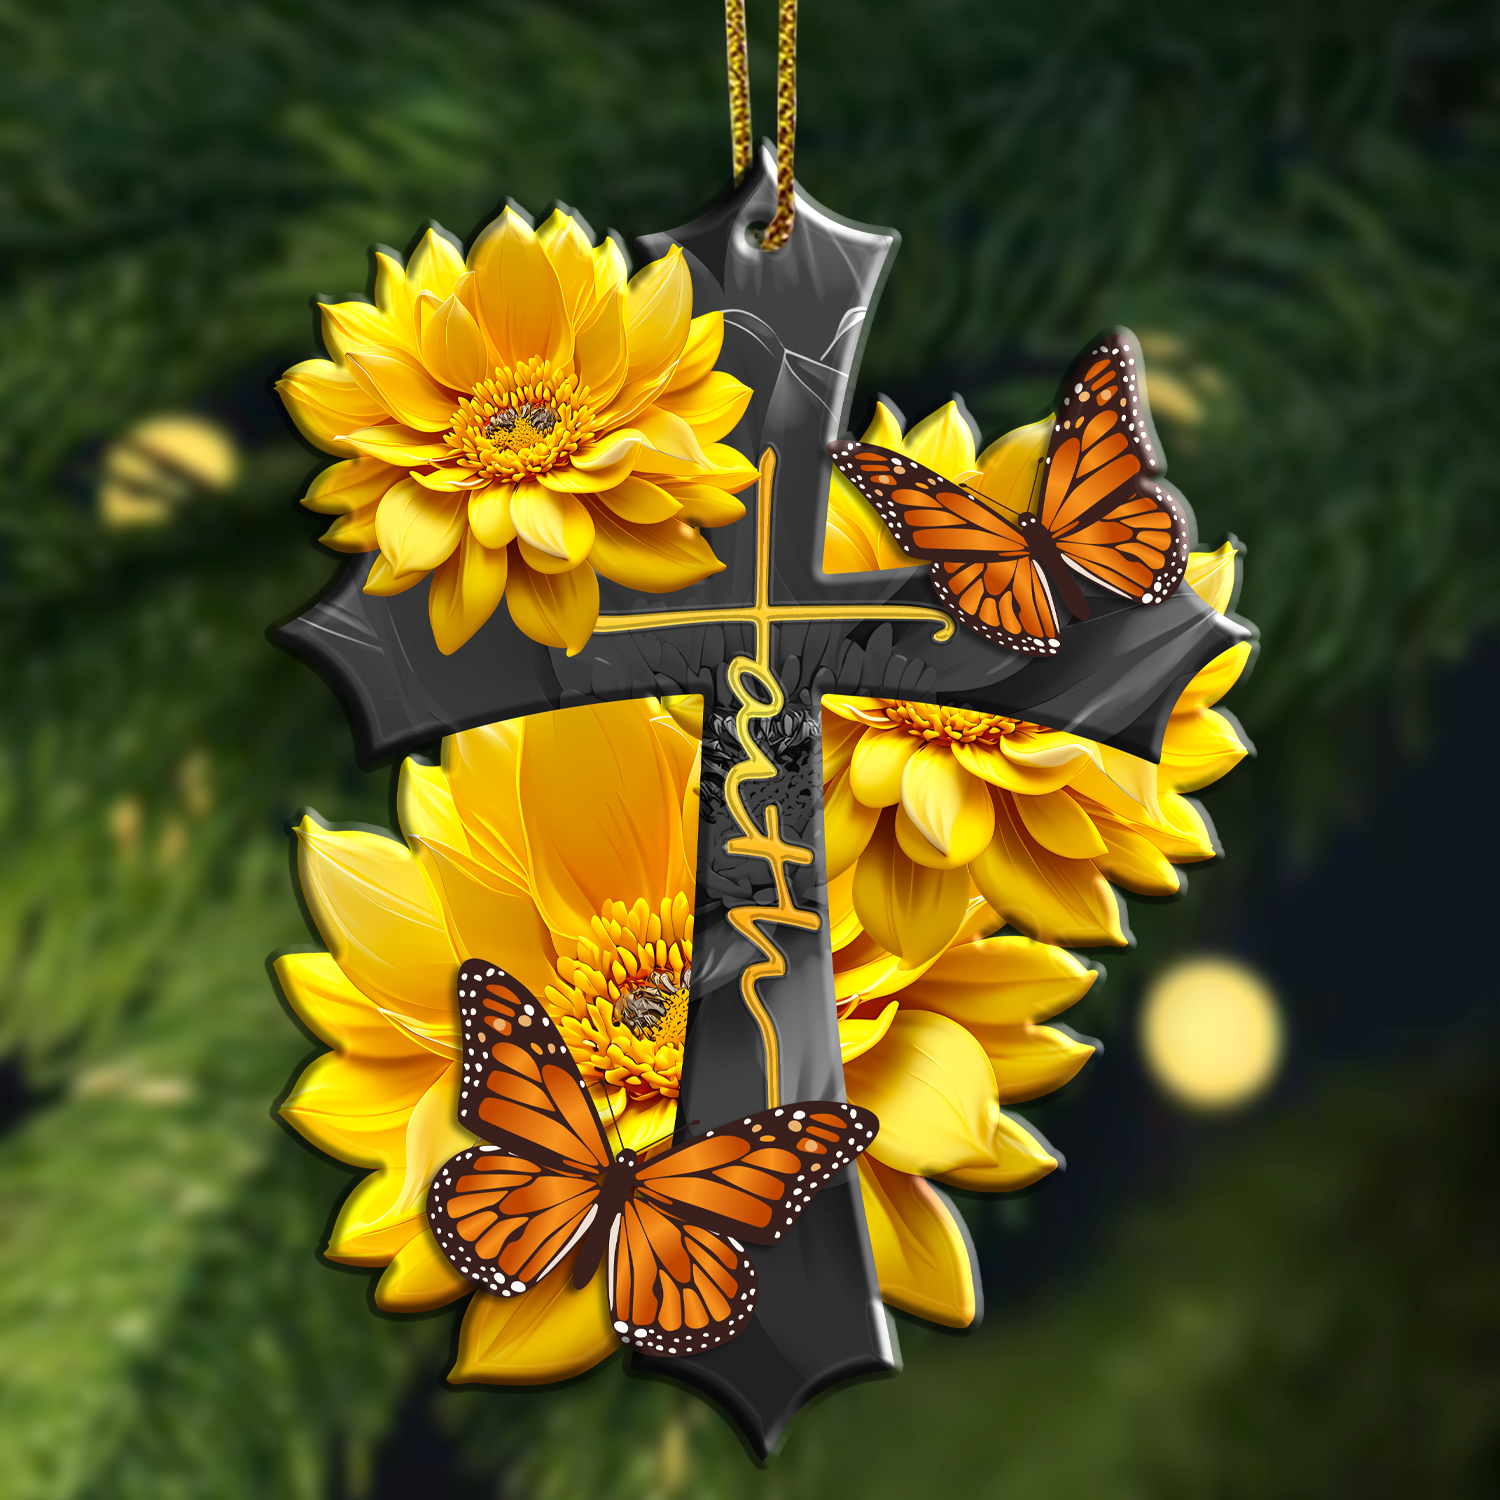 Sunflower Faith Butterfly Christian Cross Ornament Gift Christmas Ornament Car Hanging